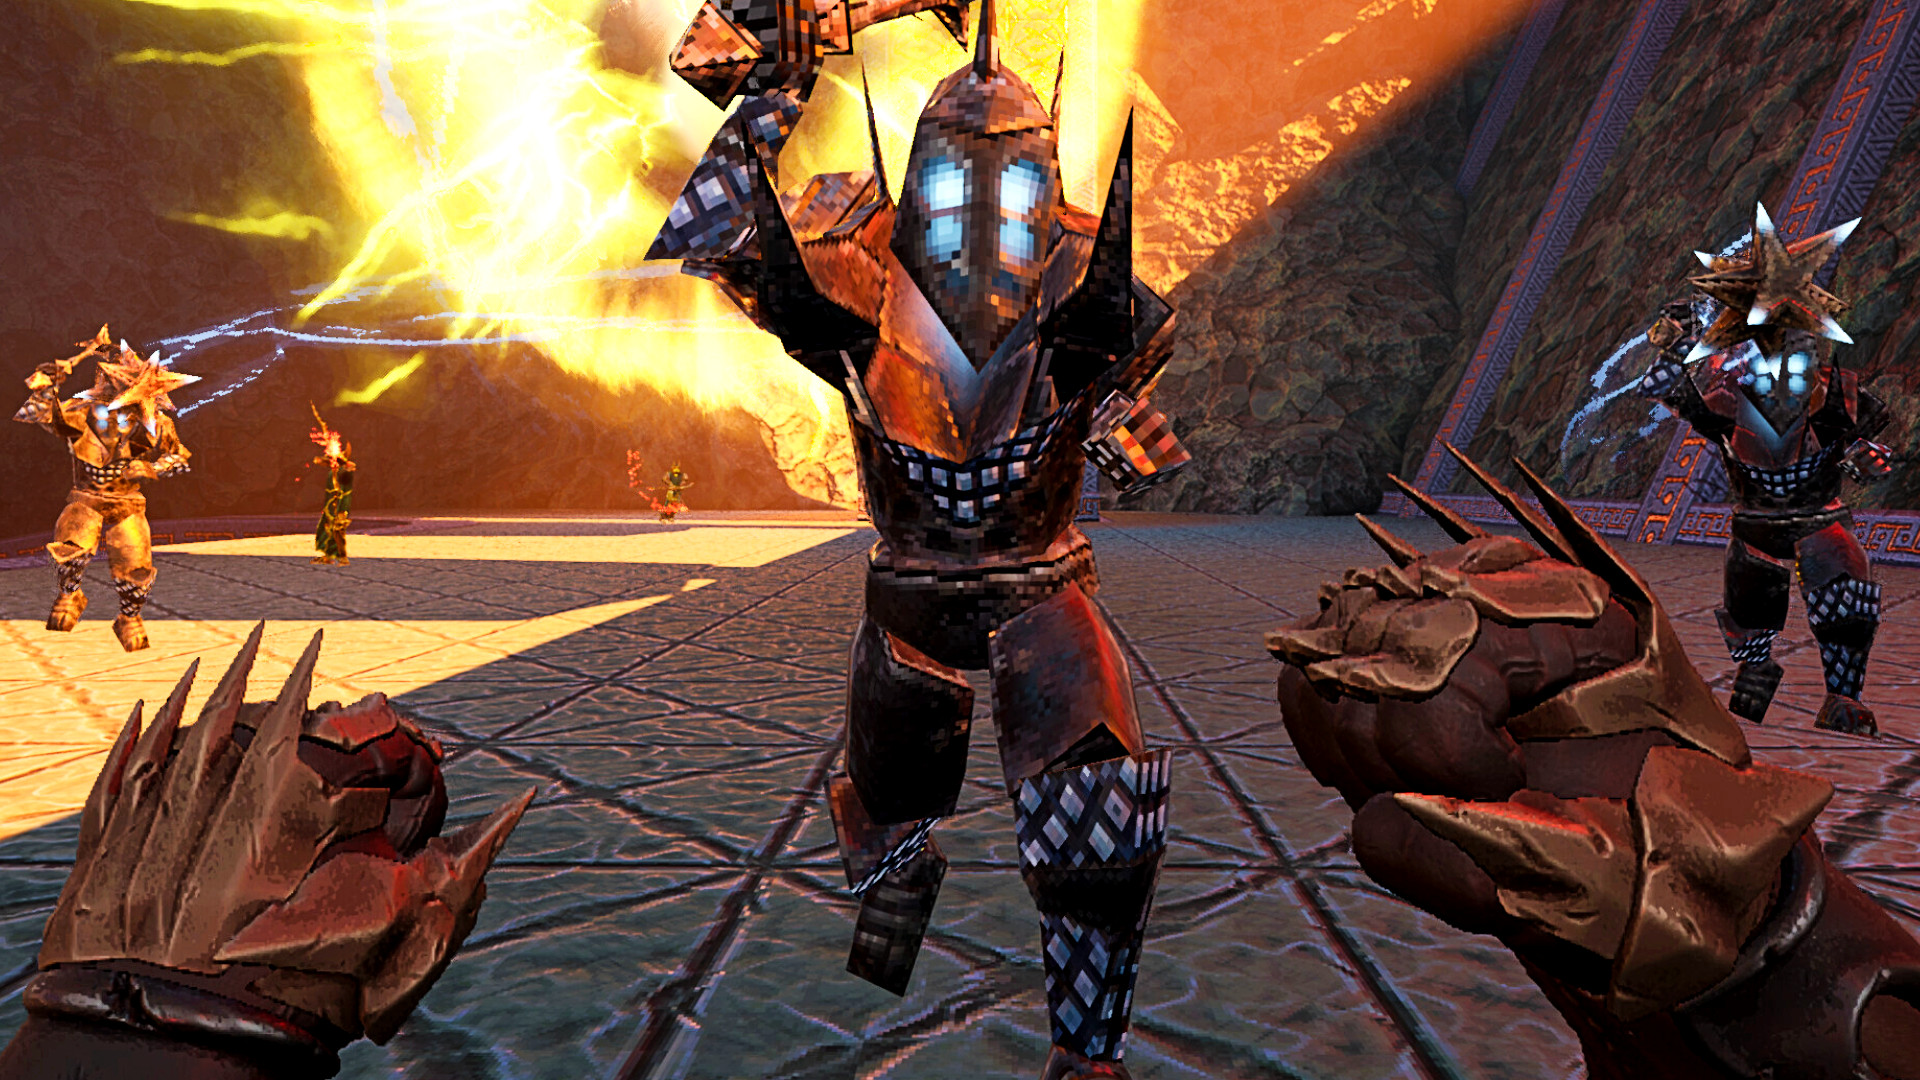 Doom meets dark fantasy as beloved FPS game gets prequel on Steam